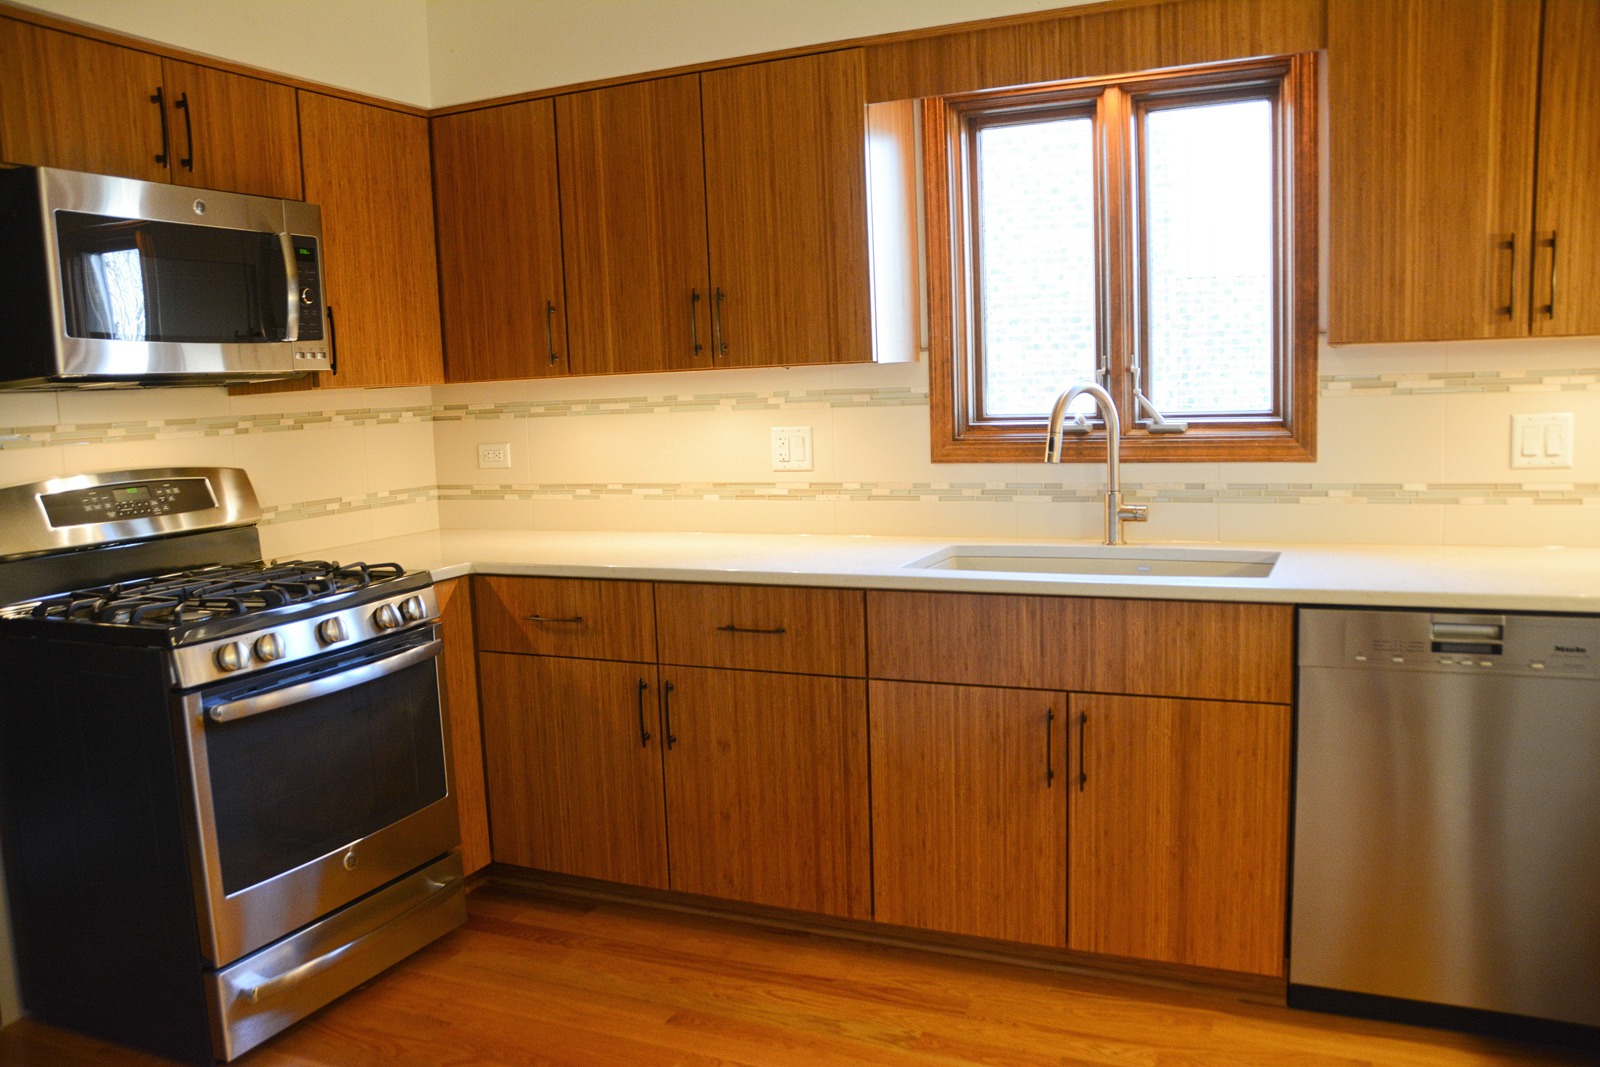 This modern kitchen has quartz counters and a glass tile backsplash